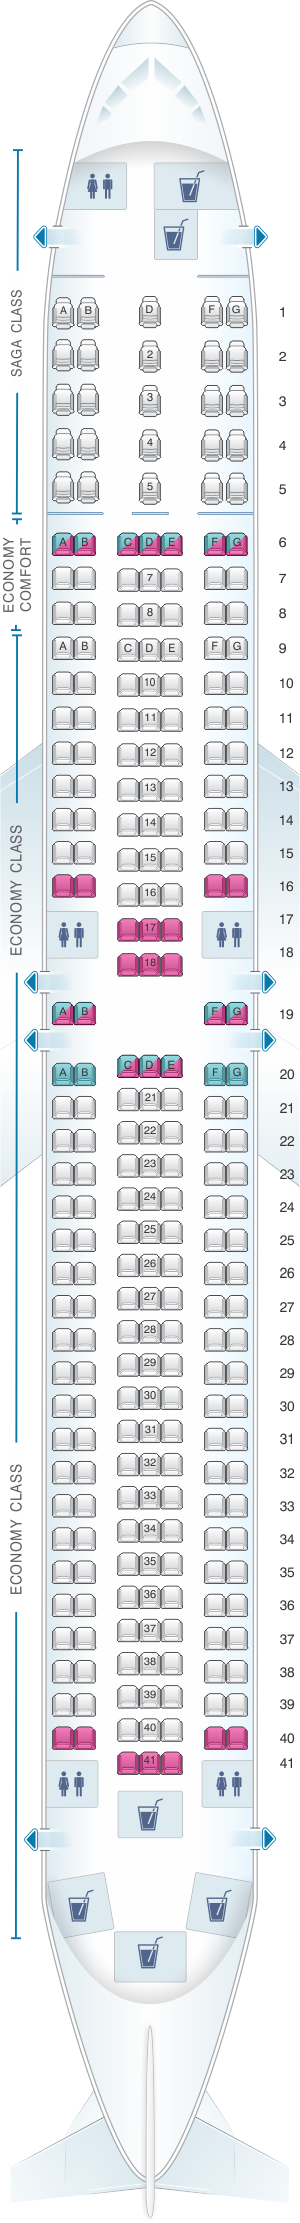 Icelandair Flight 614 Seating Chart